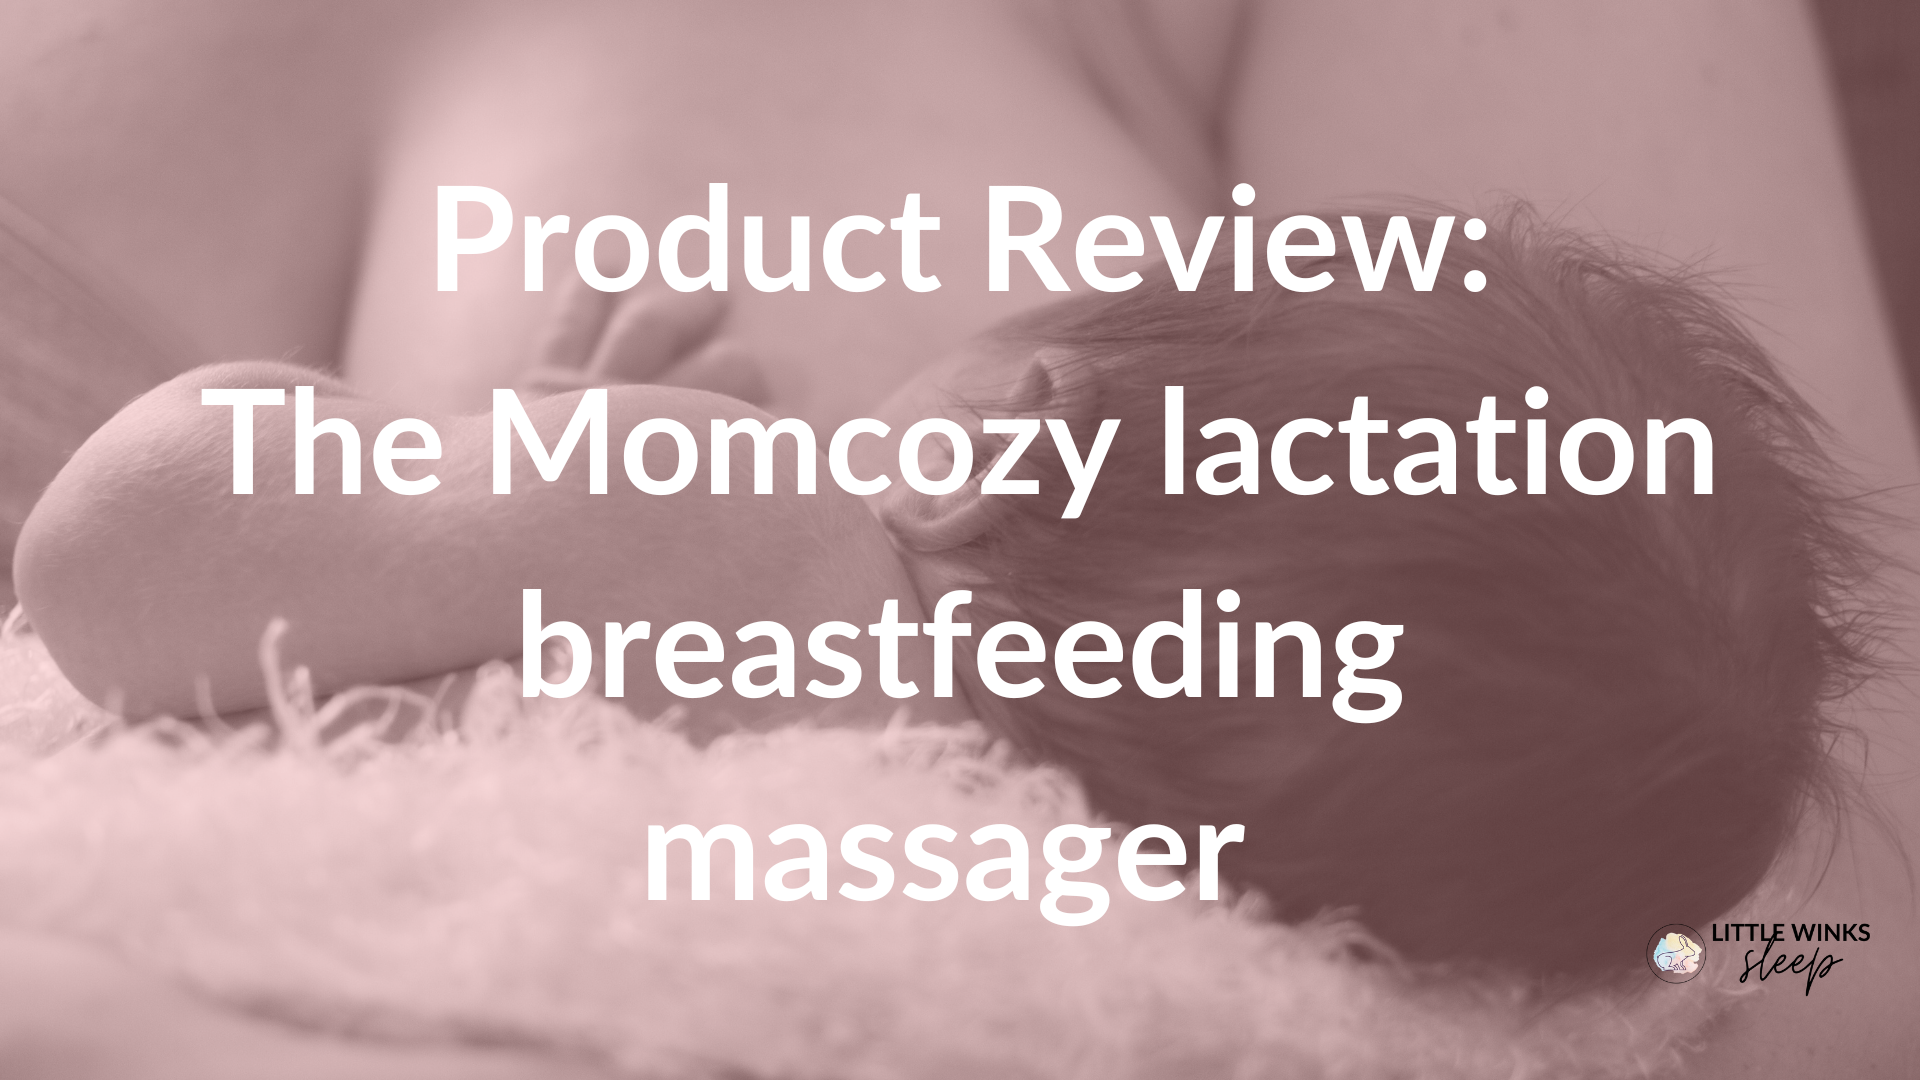 Product: The Momcozy lactation breastfeeding massager — Little Winks Sleep